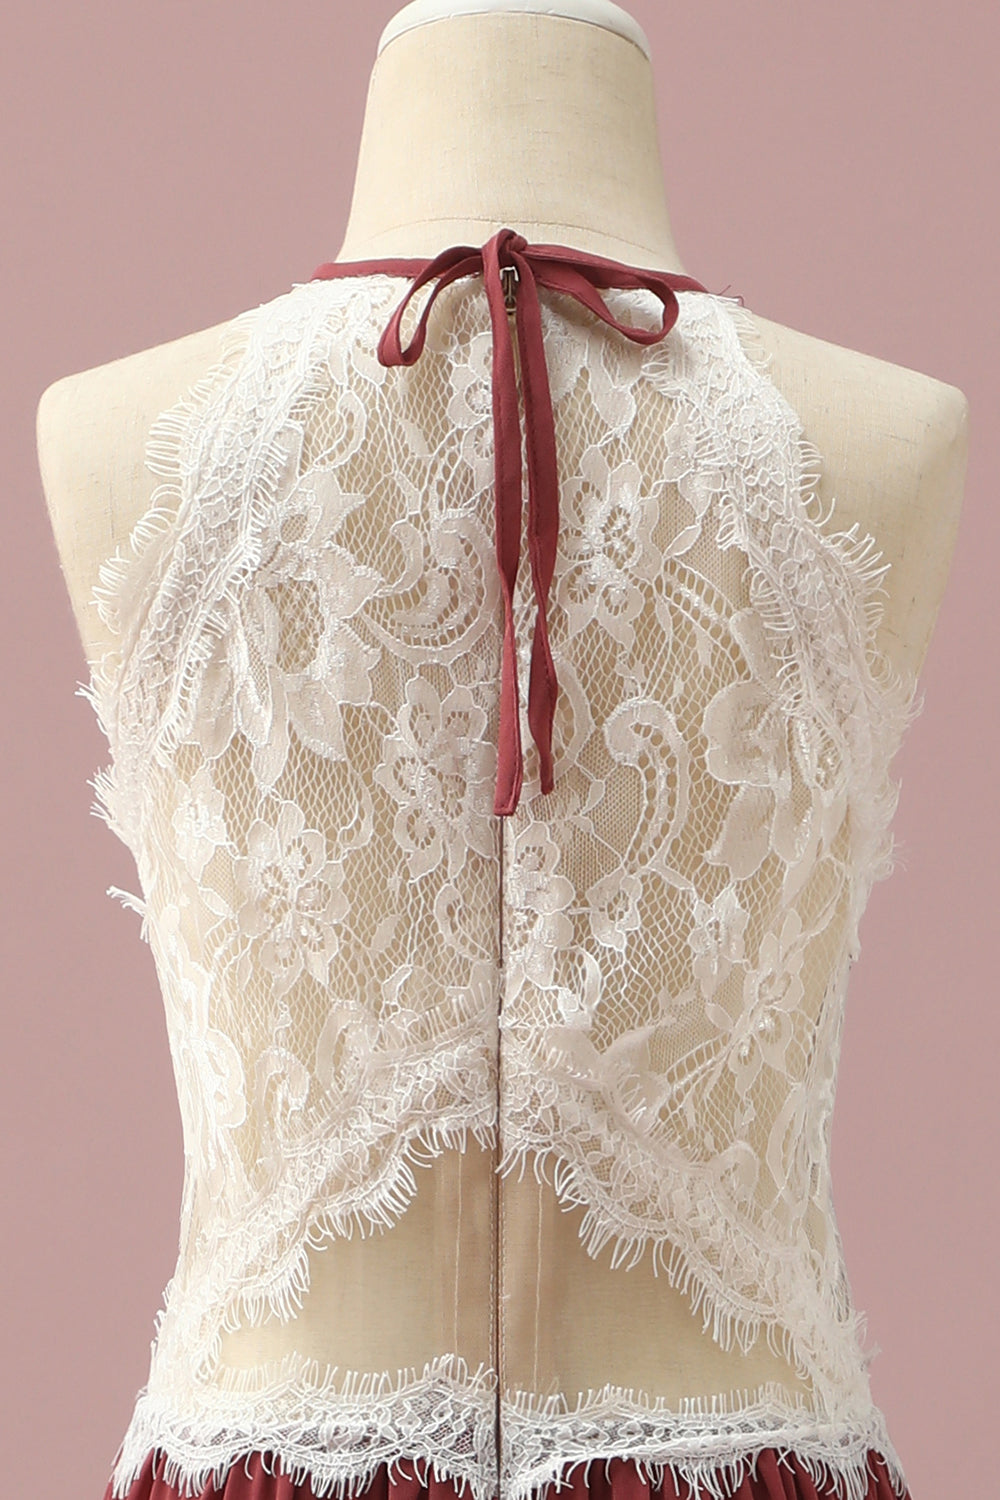 Burgundy A-Line Halter Floor Length Junior Bridesmaid Dress With Floral Lace